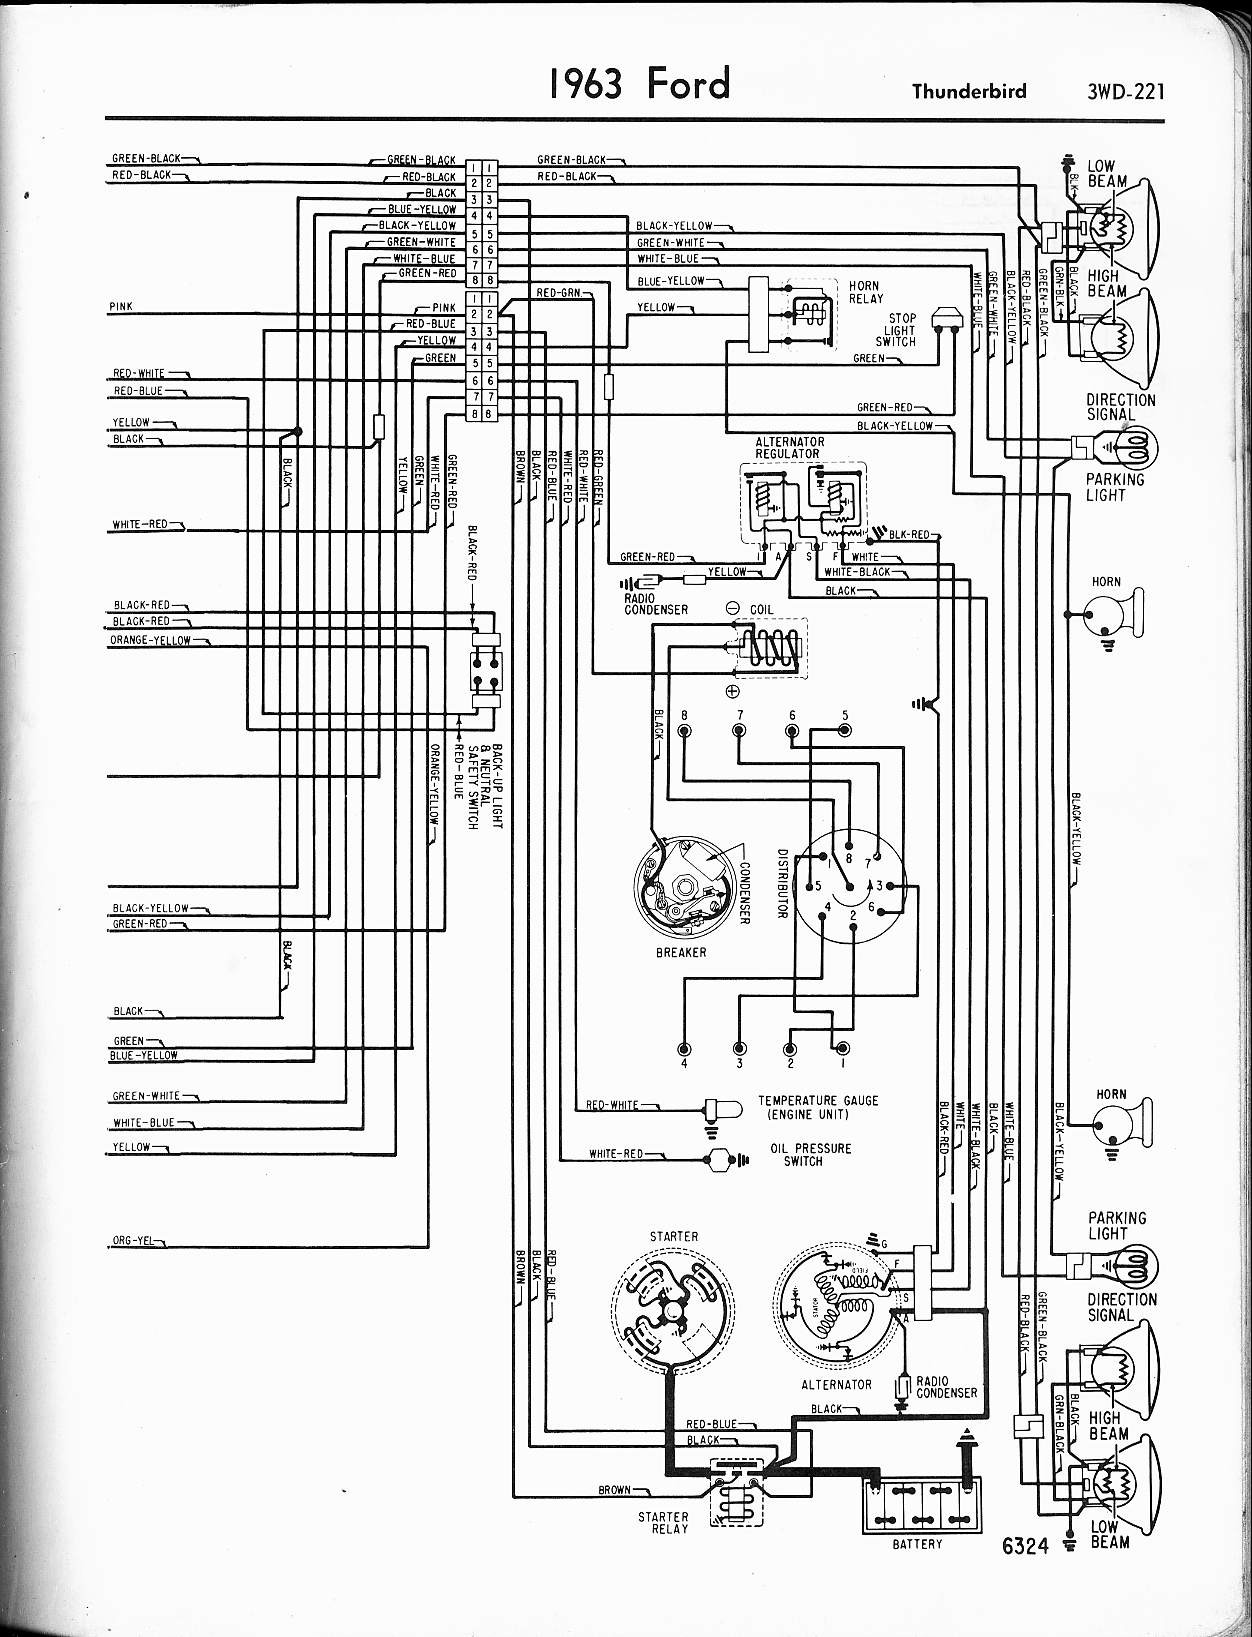 1964 Ford Falcon Wiring Diagram from detoxicrecenze.com